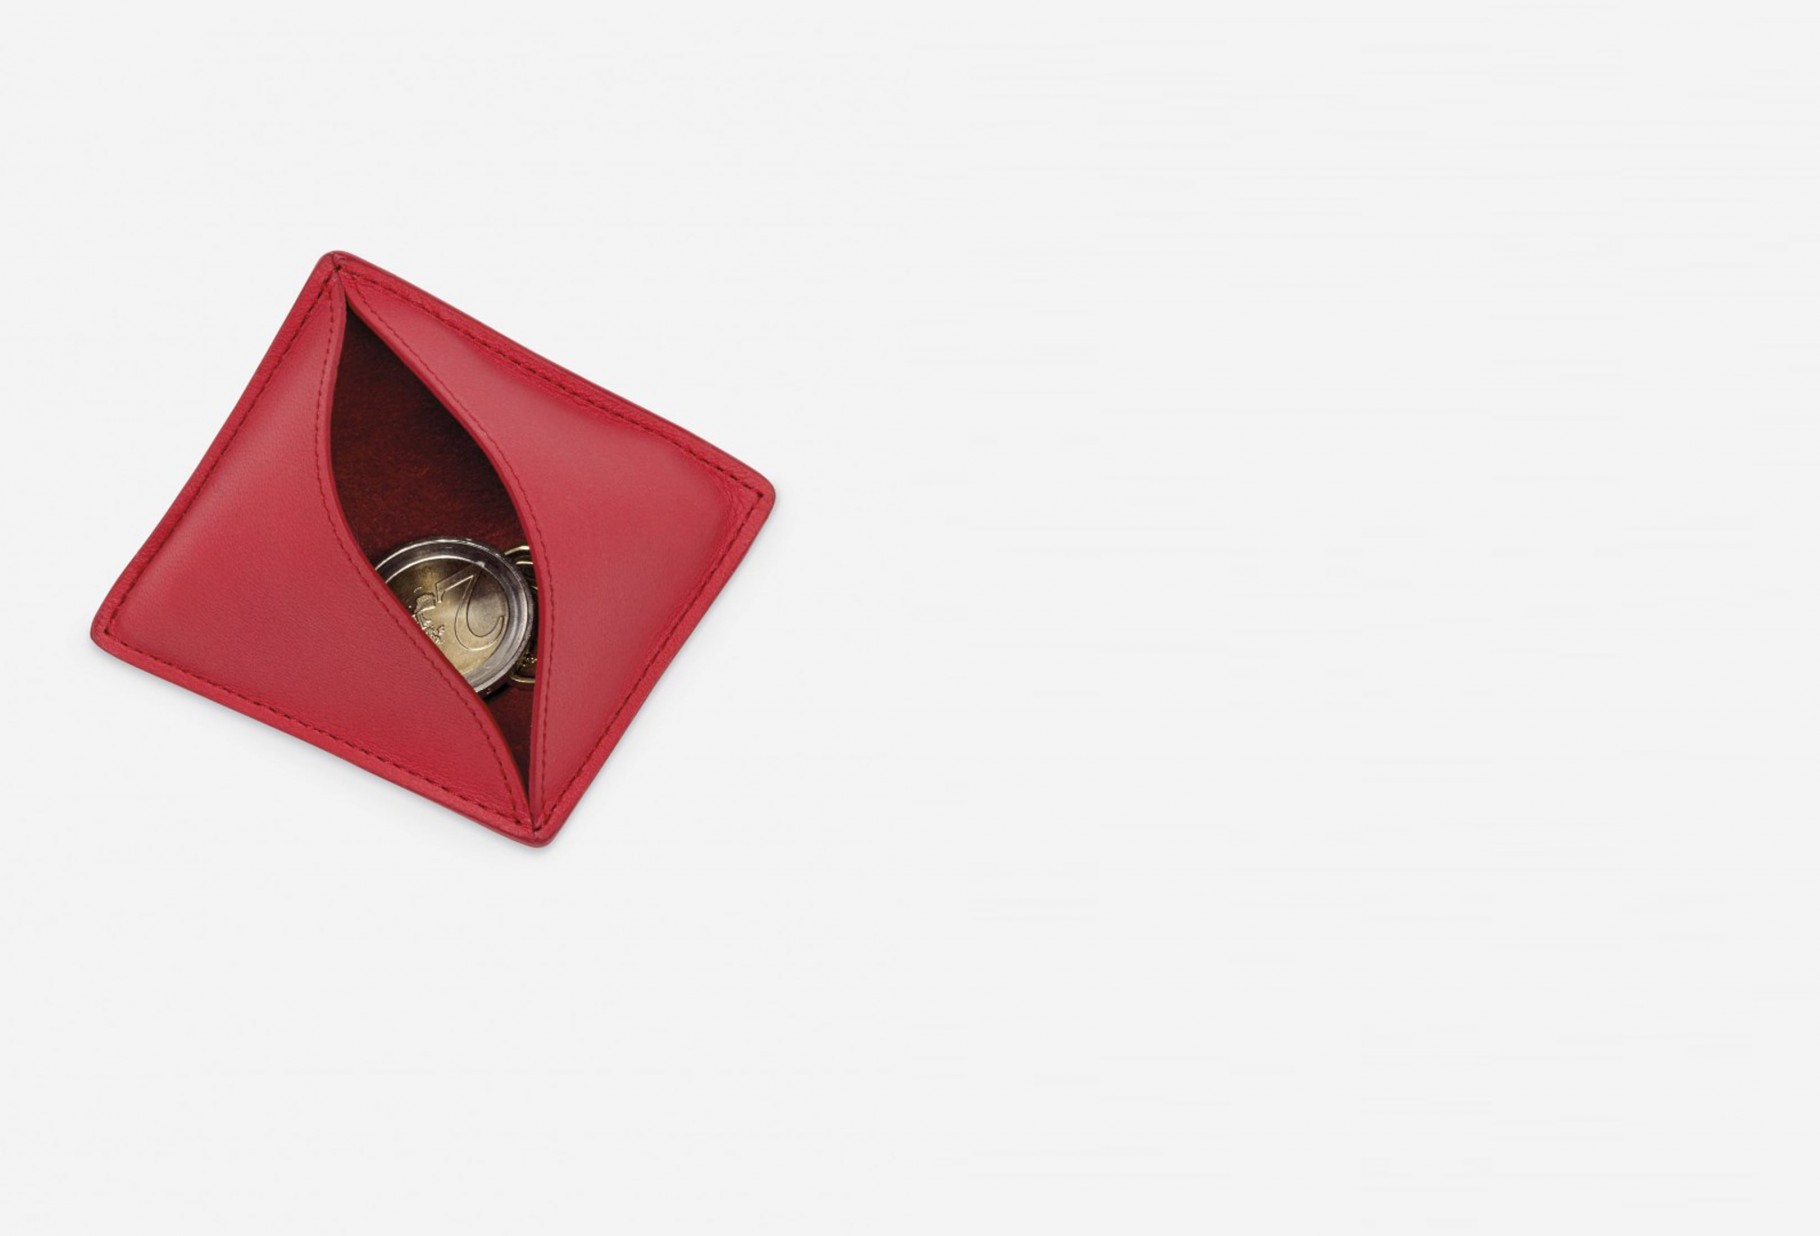  / Cm39 purse Red